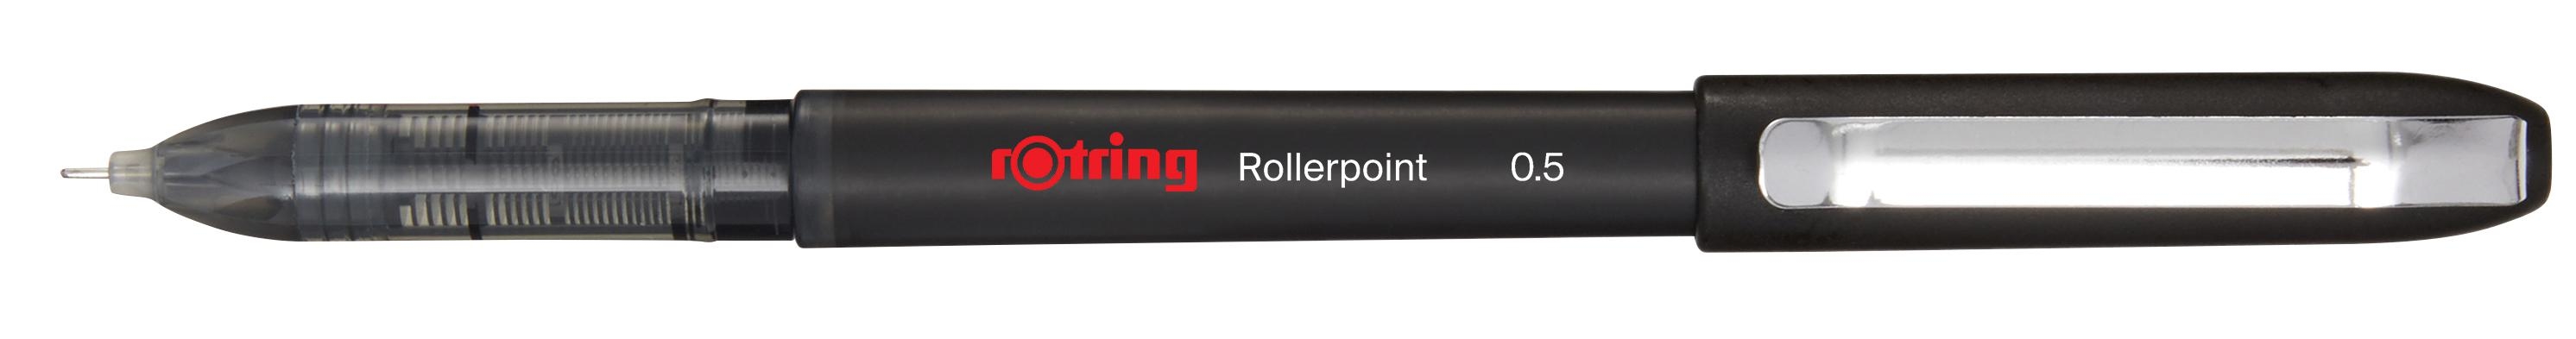 ROTRING Rollerpoint 0.5mm 2146103 noir